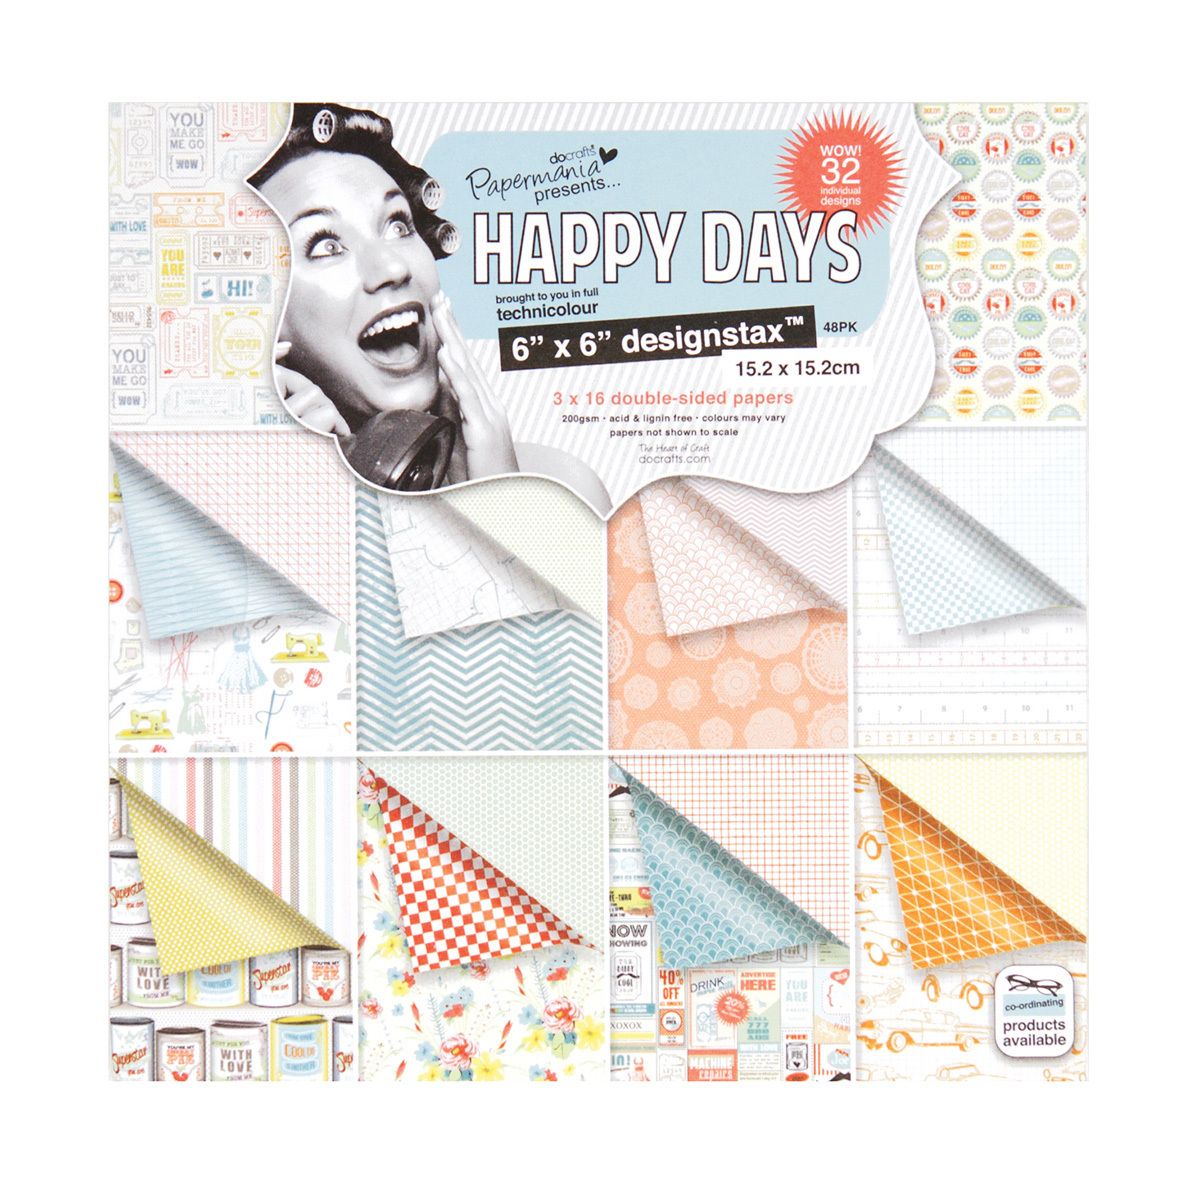 HAPPY DAYS ♥ 6x6 DESIGNSTAX PAPER PAD ♥ PAPERMANIA